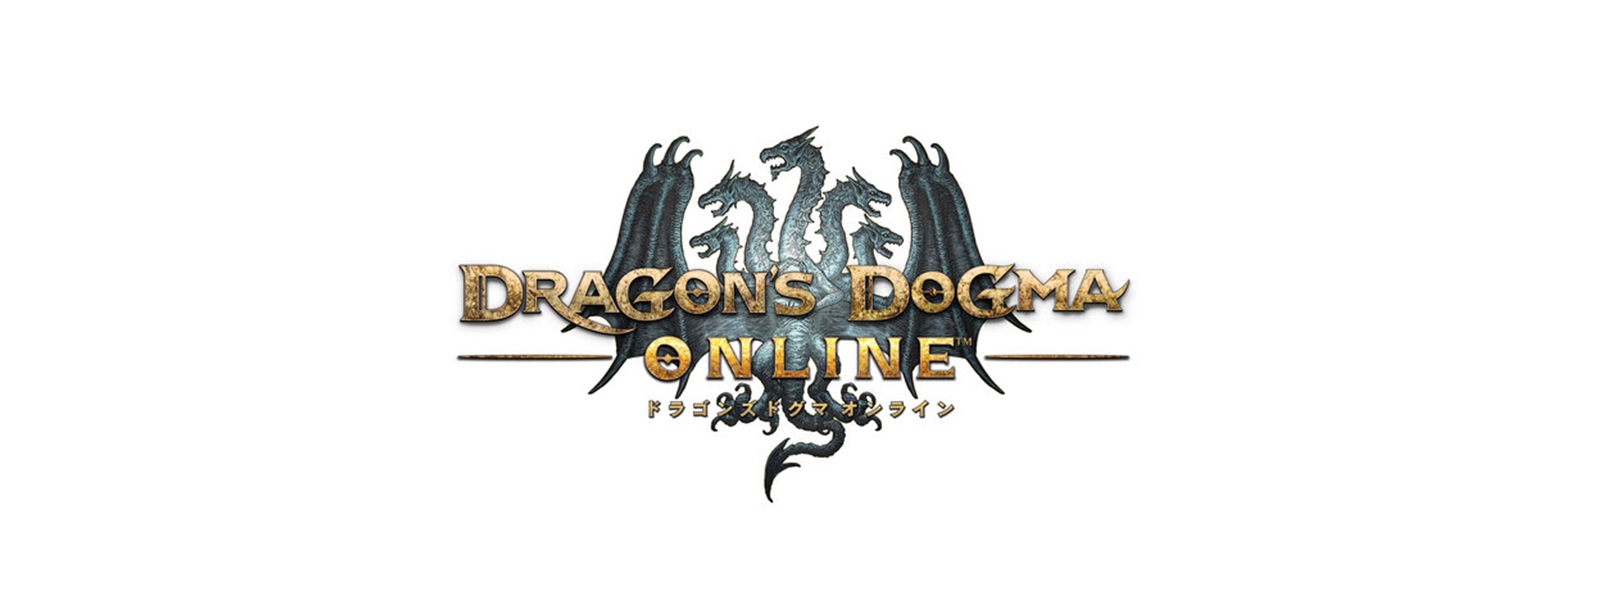 Dragon s dogma 2 заключенный законник